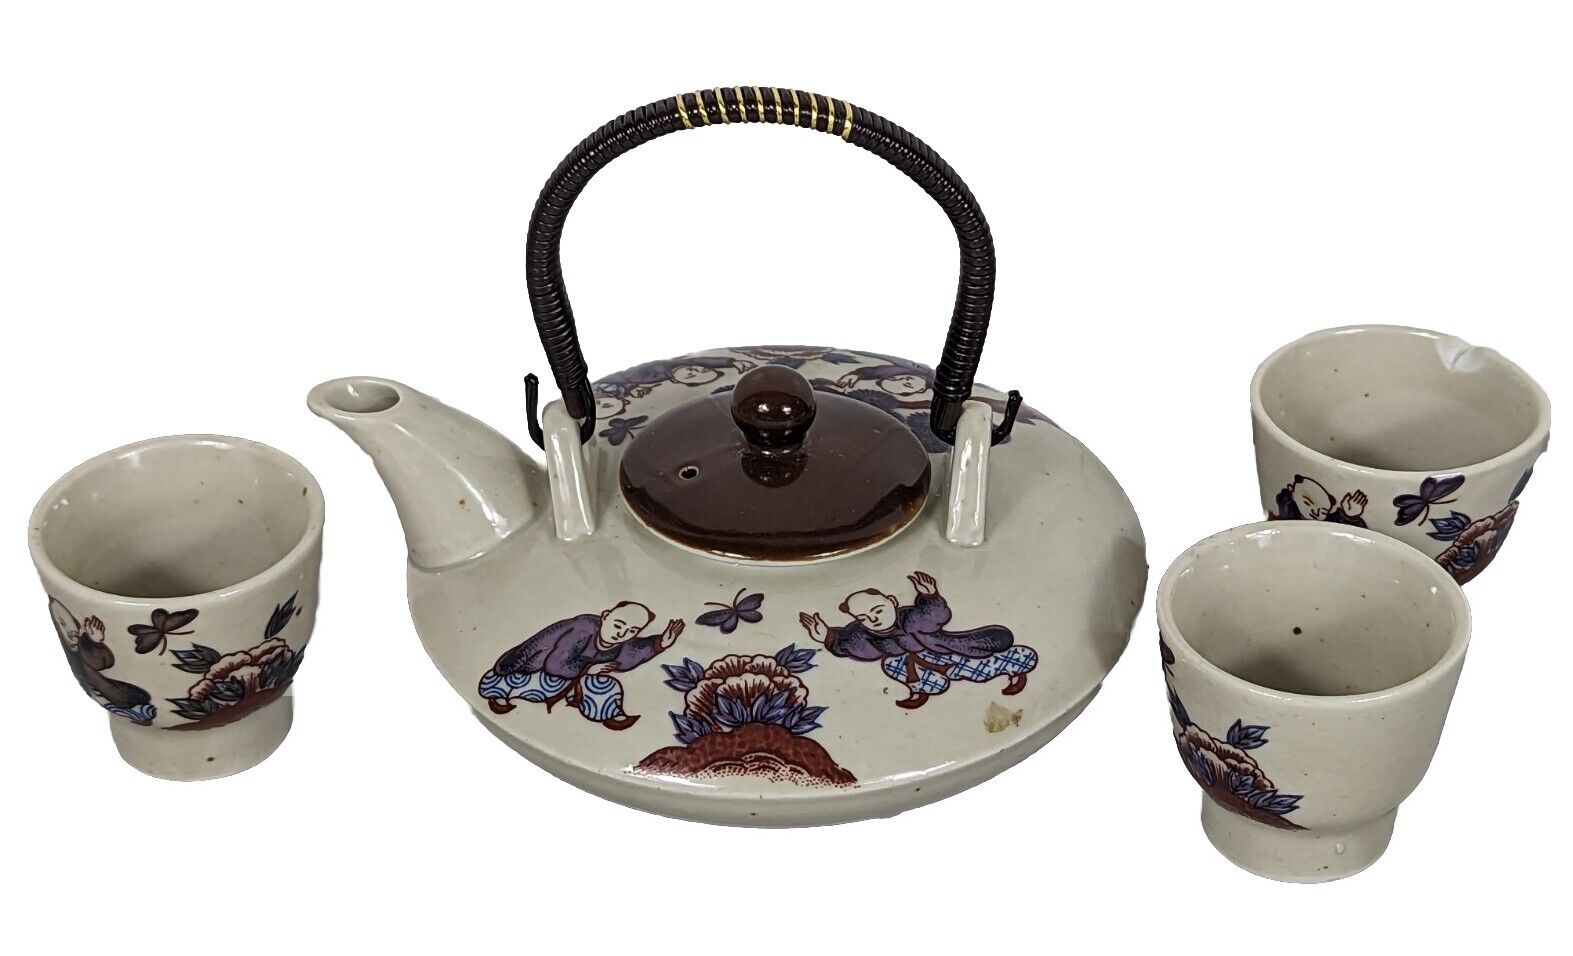 Vintage 1970's Japanese Teapot and Teacups Set - JAPAN  Flowers Butterfly Figure